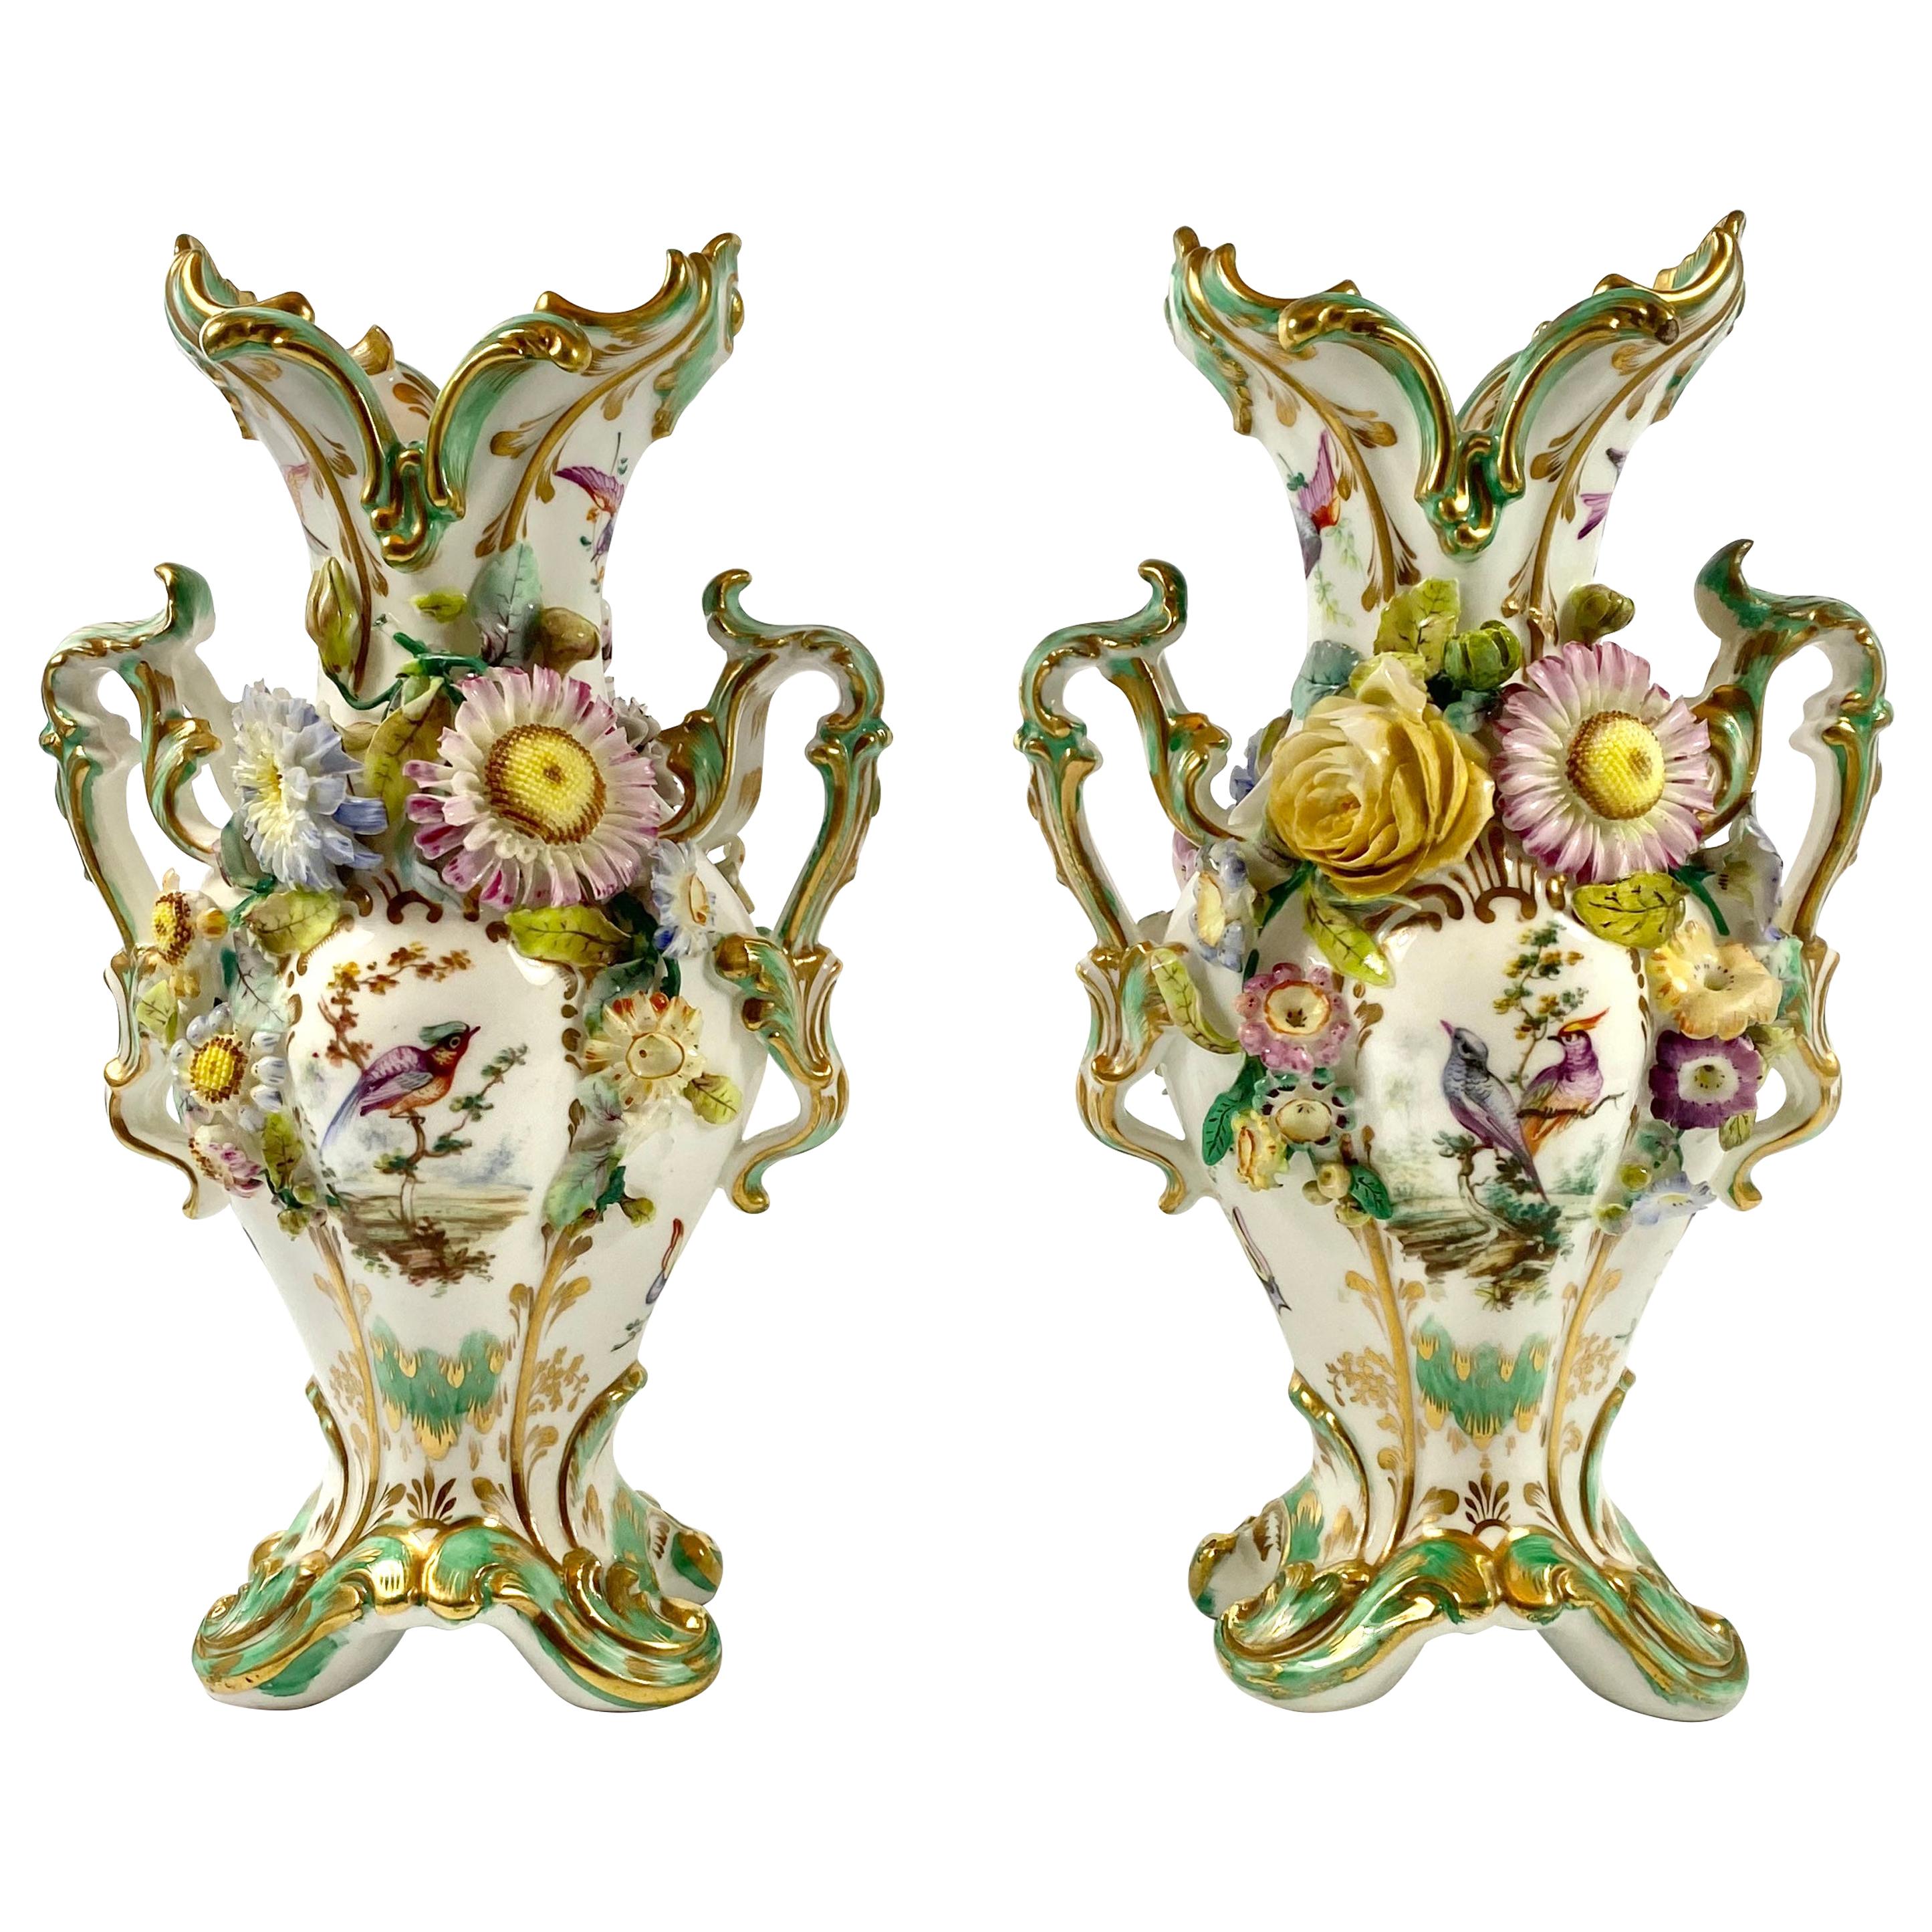 Pair of Coalbrookdale Encrusted Porcelain Vases, circa 1830